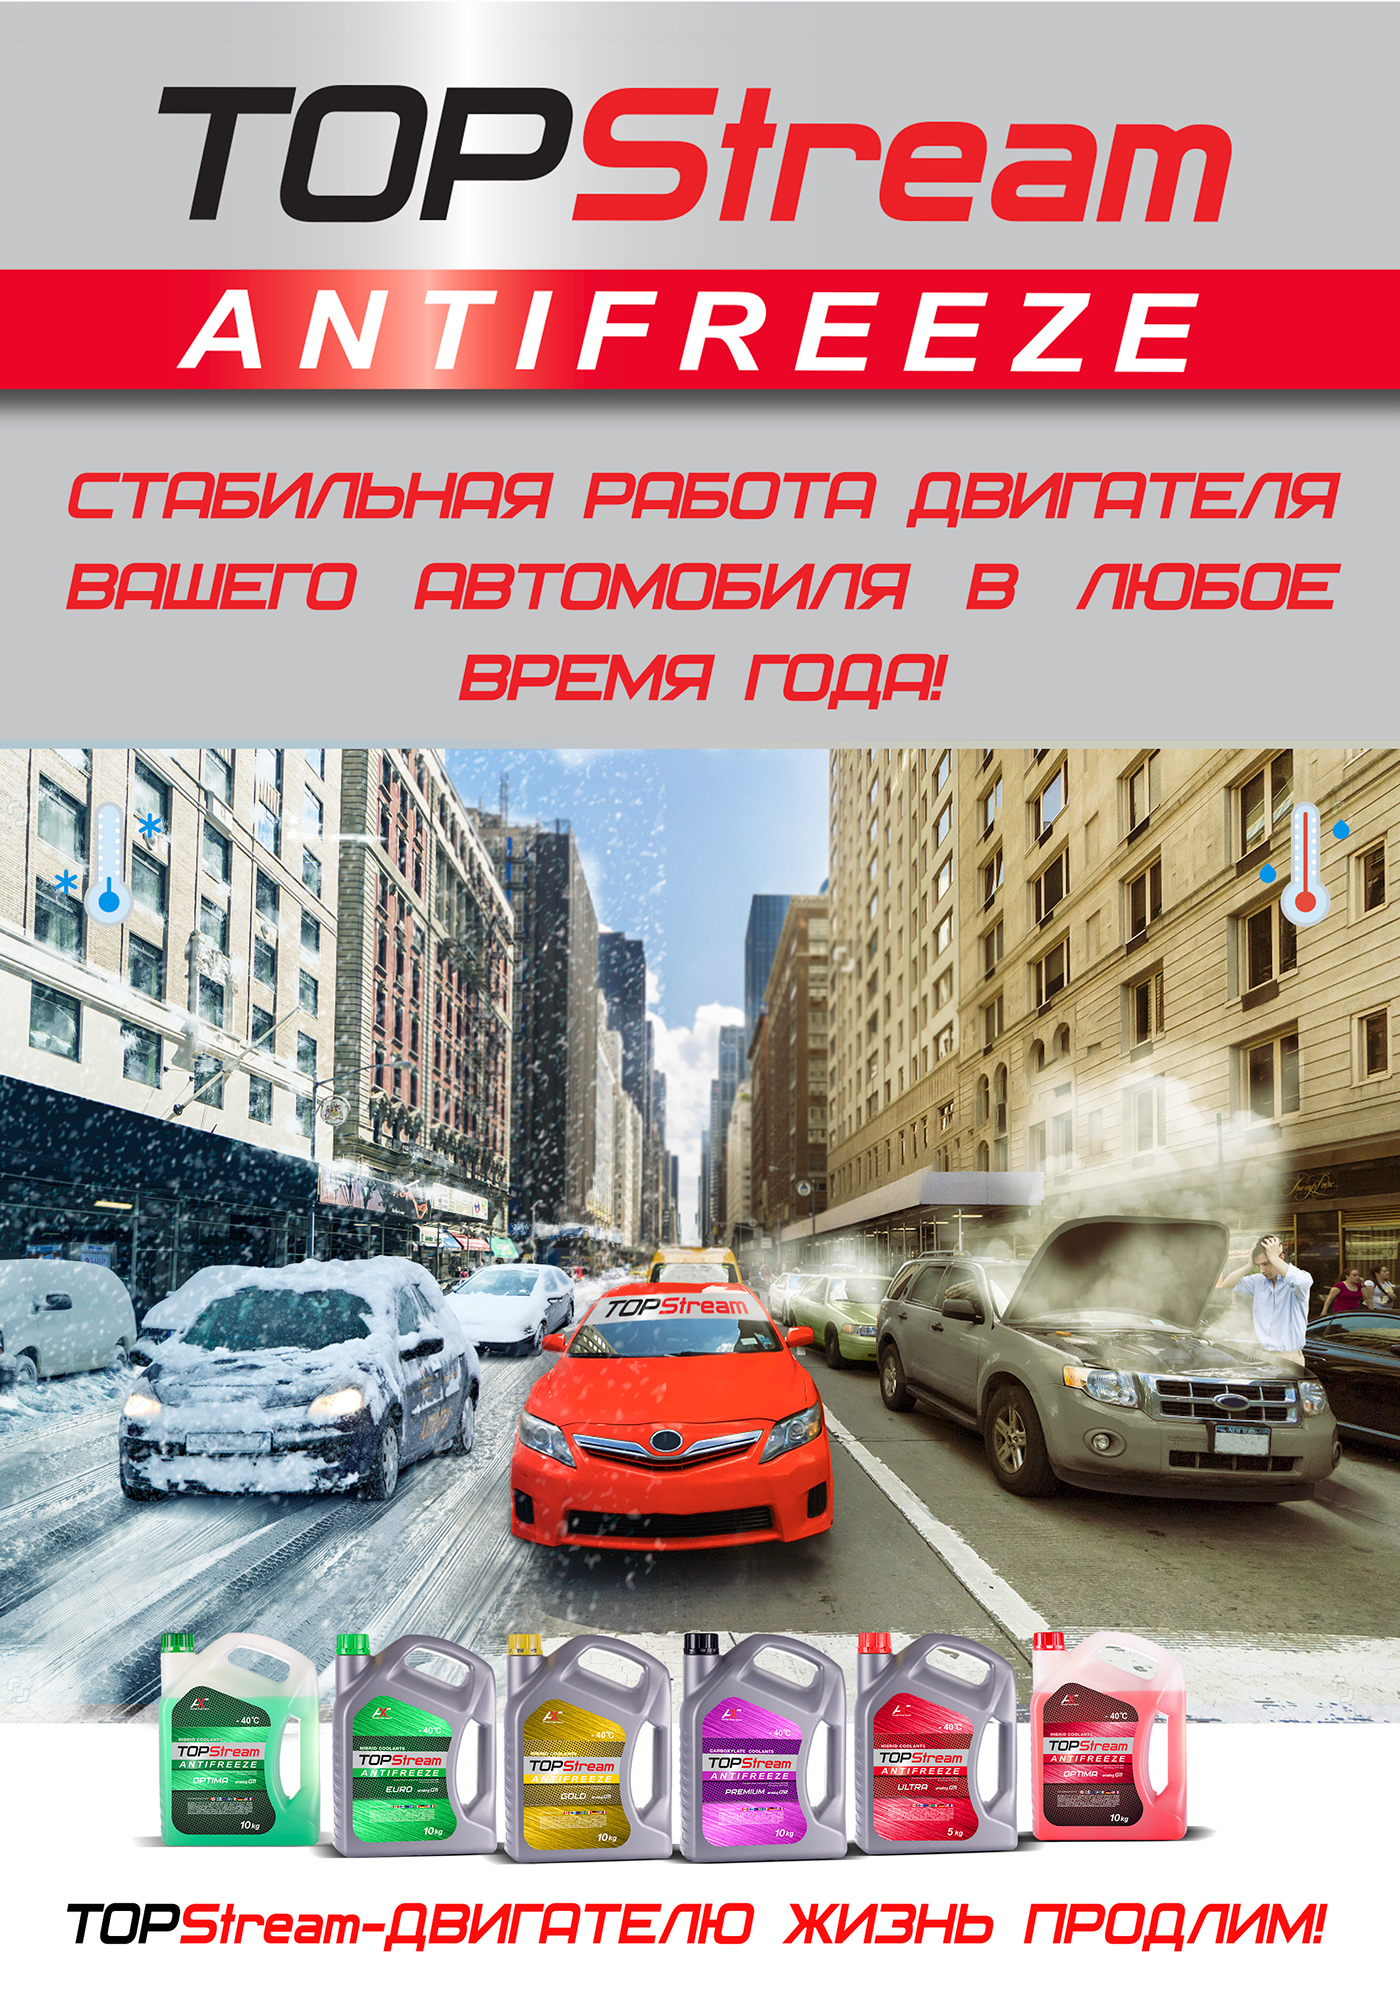 poster antifreeze car product coolant ILLUSTRATION  city posm marketing   Advertising 